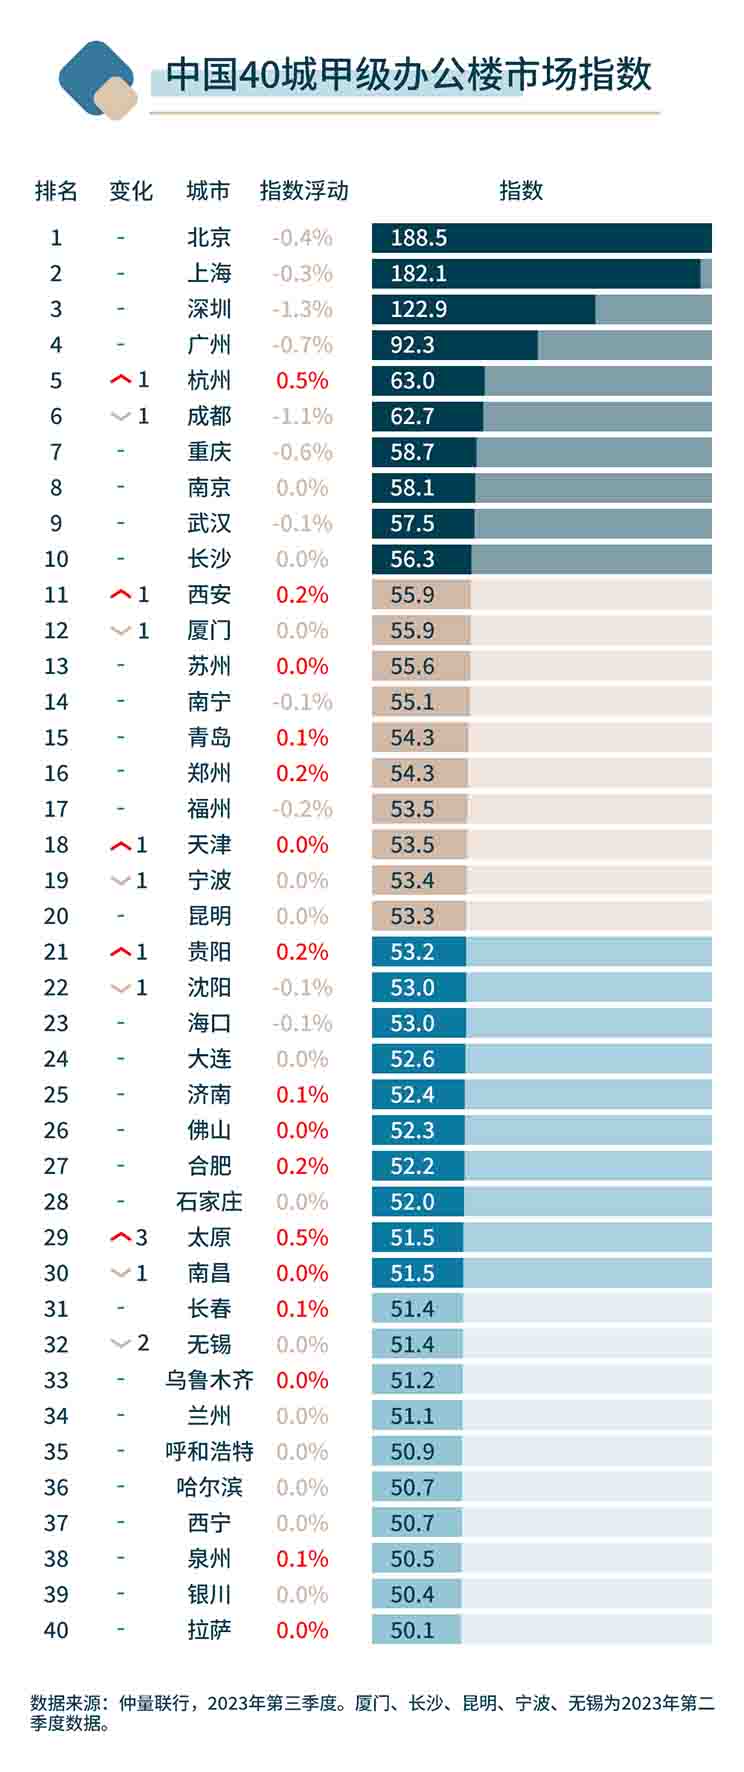 China 3Q 40 city office index data